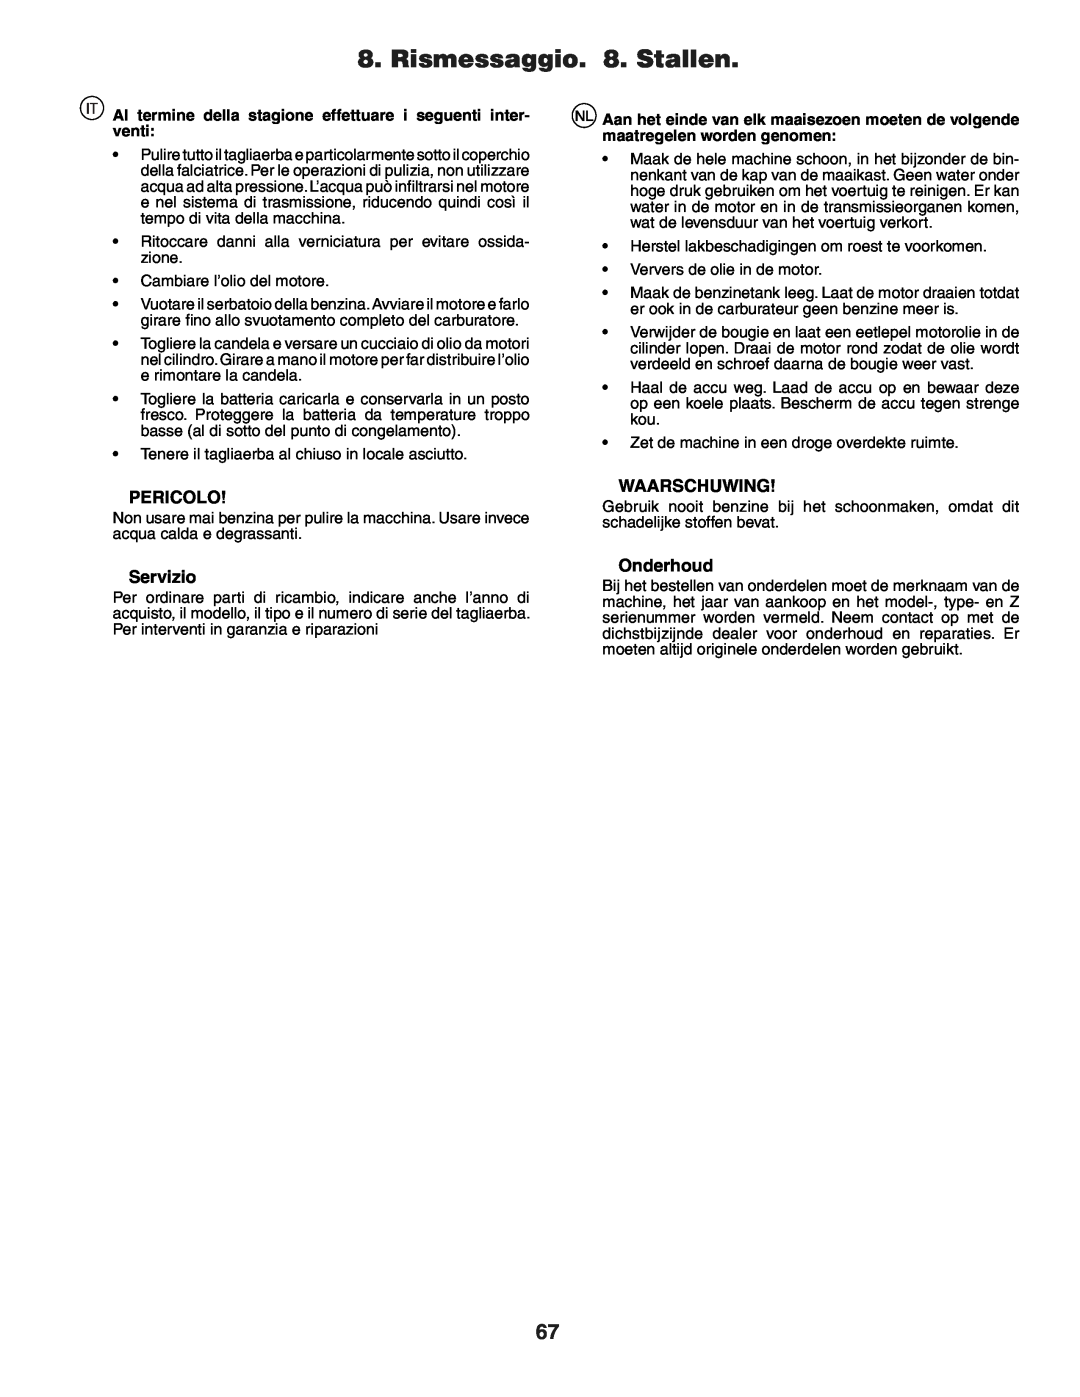 Jonsered LT2118A instruction manual Rismessaggio. 8. Stallen, Pericolo, Servizio, Waarschuwing, Onderhoud 